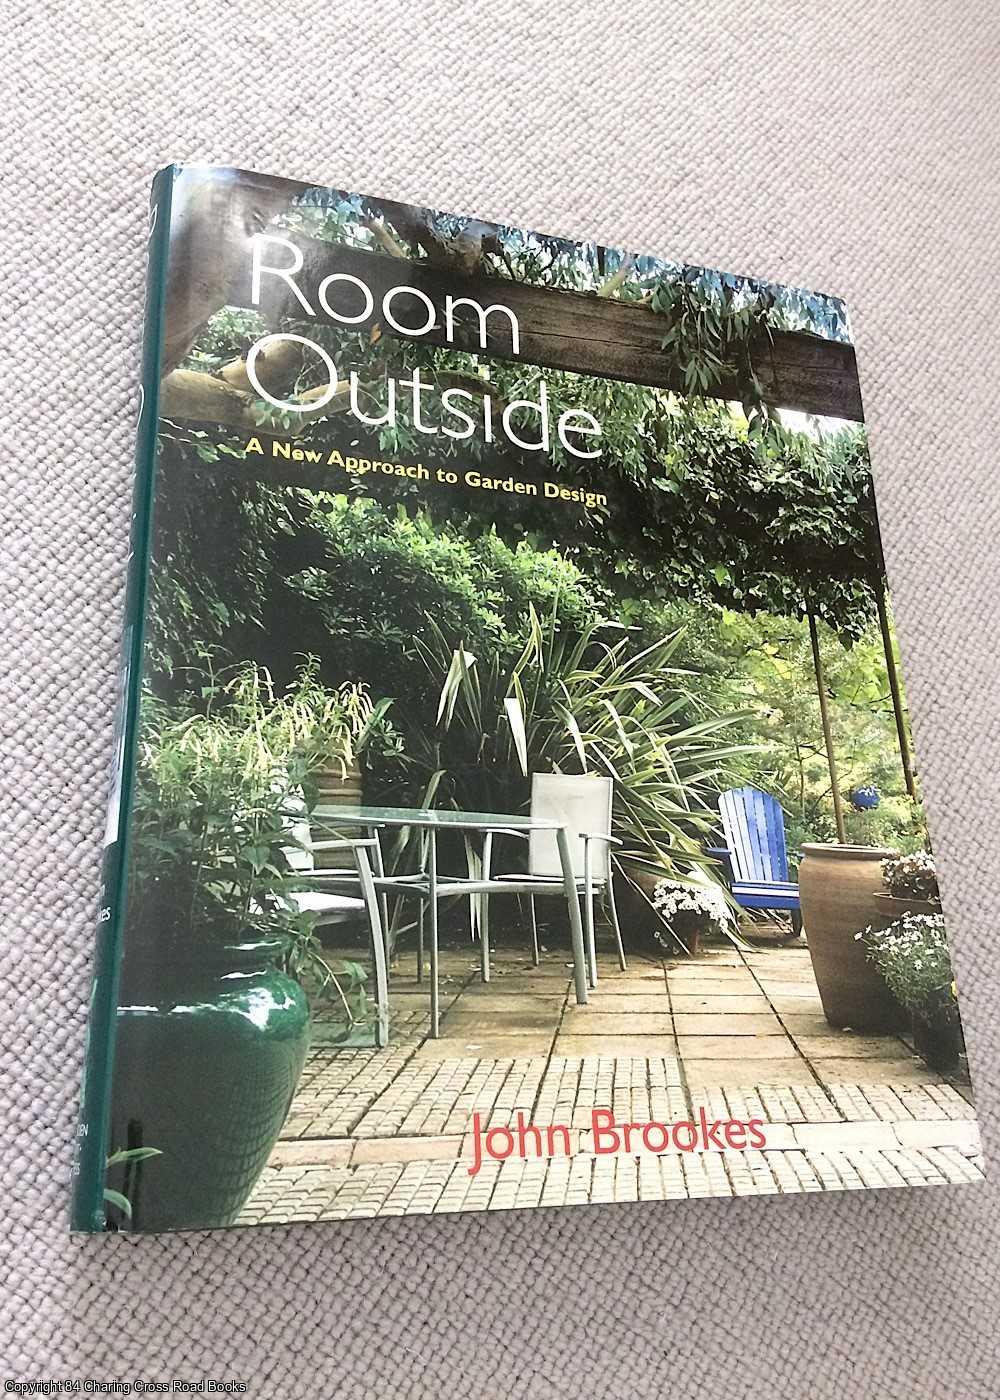 Brookes, John - Room Outside: A New Approach to Garden Design